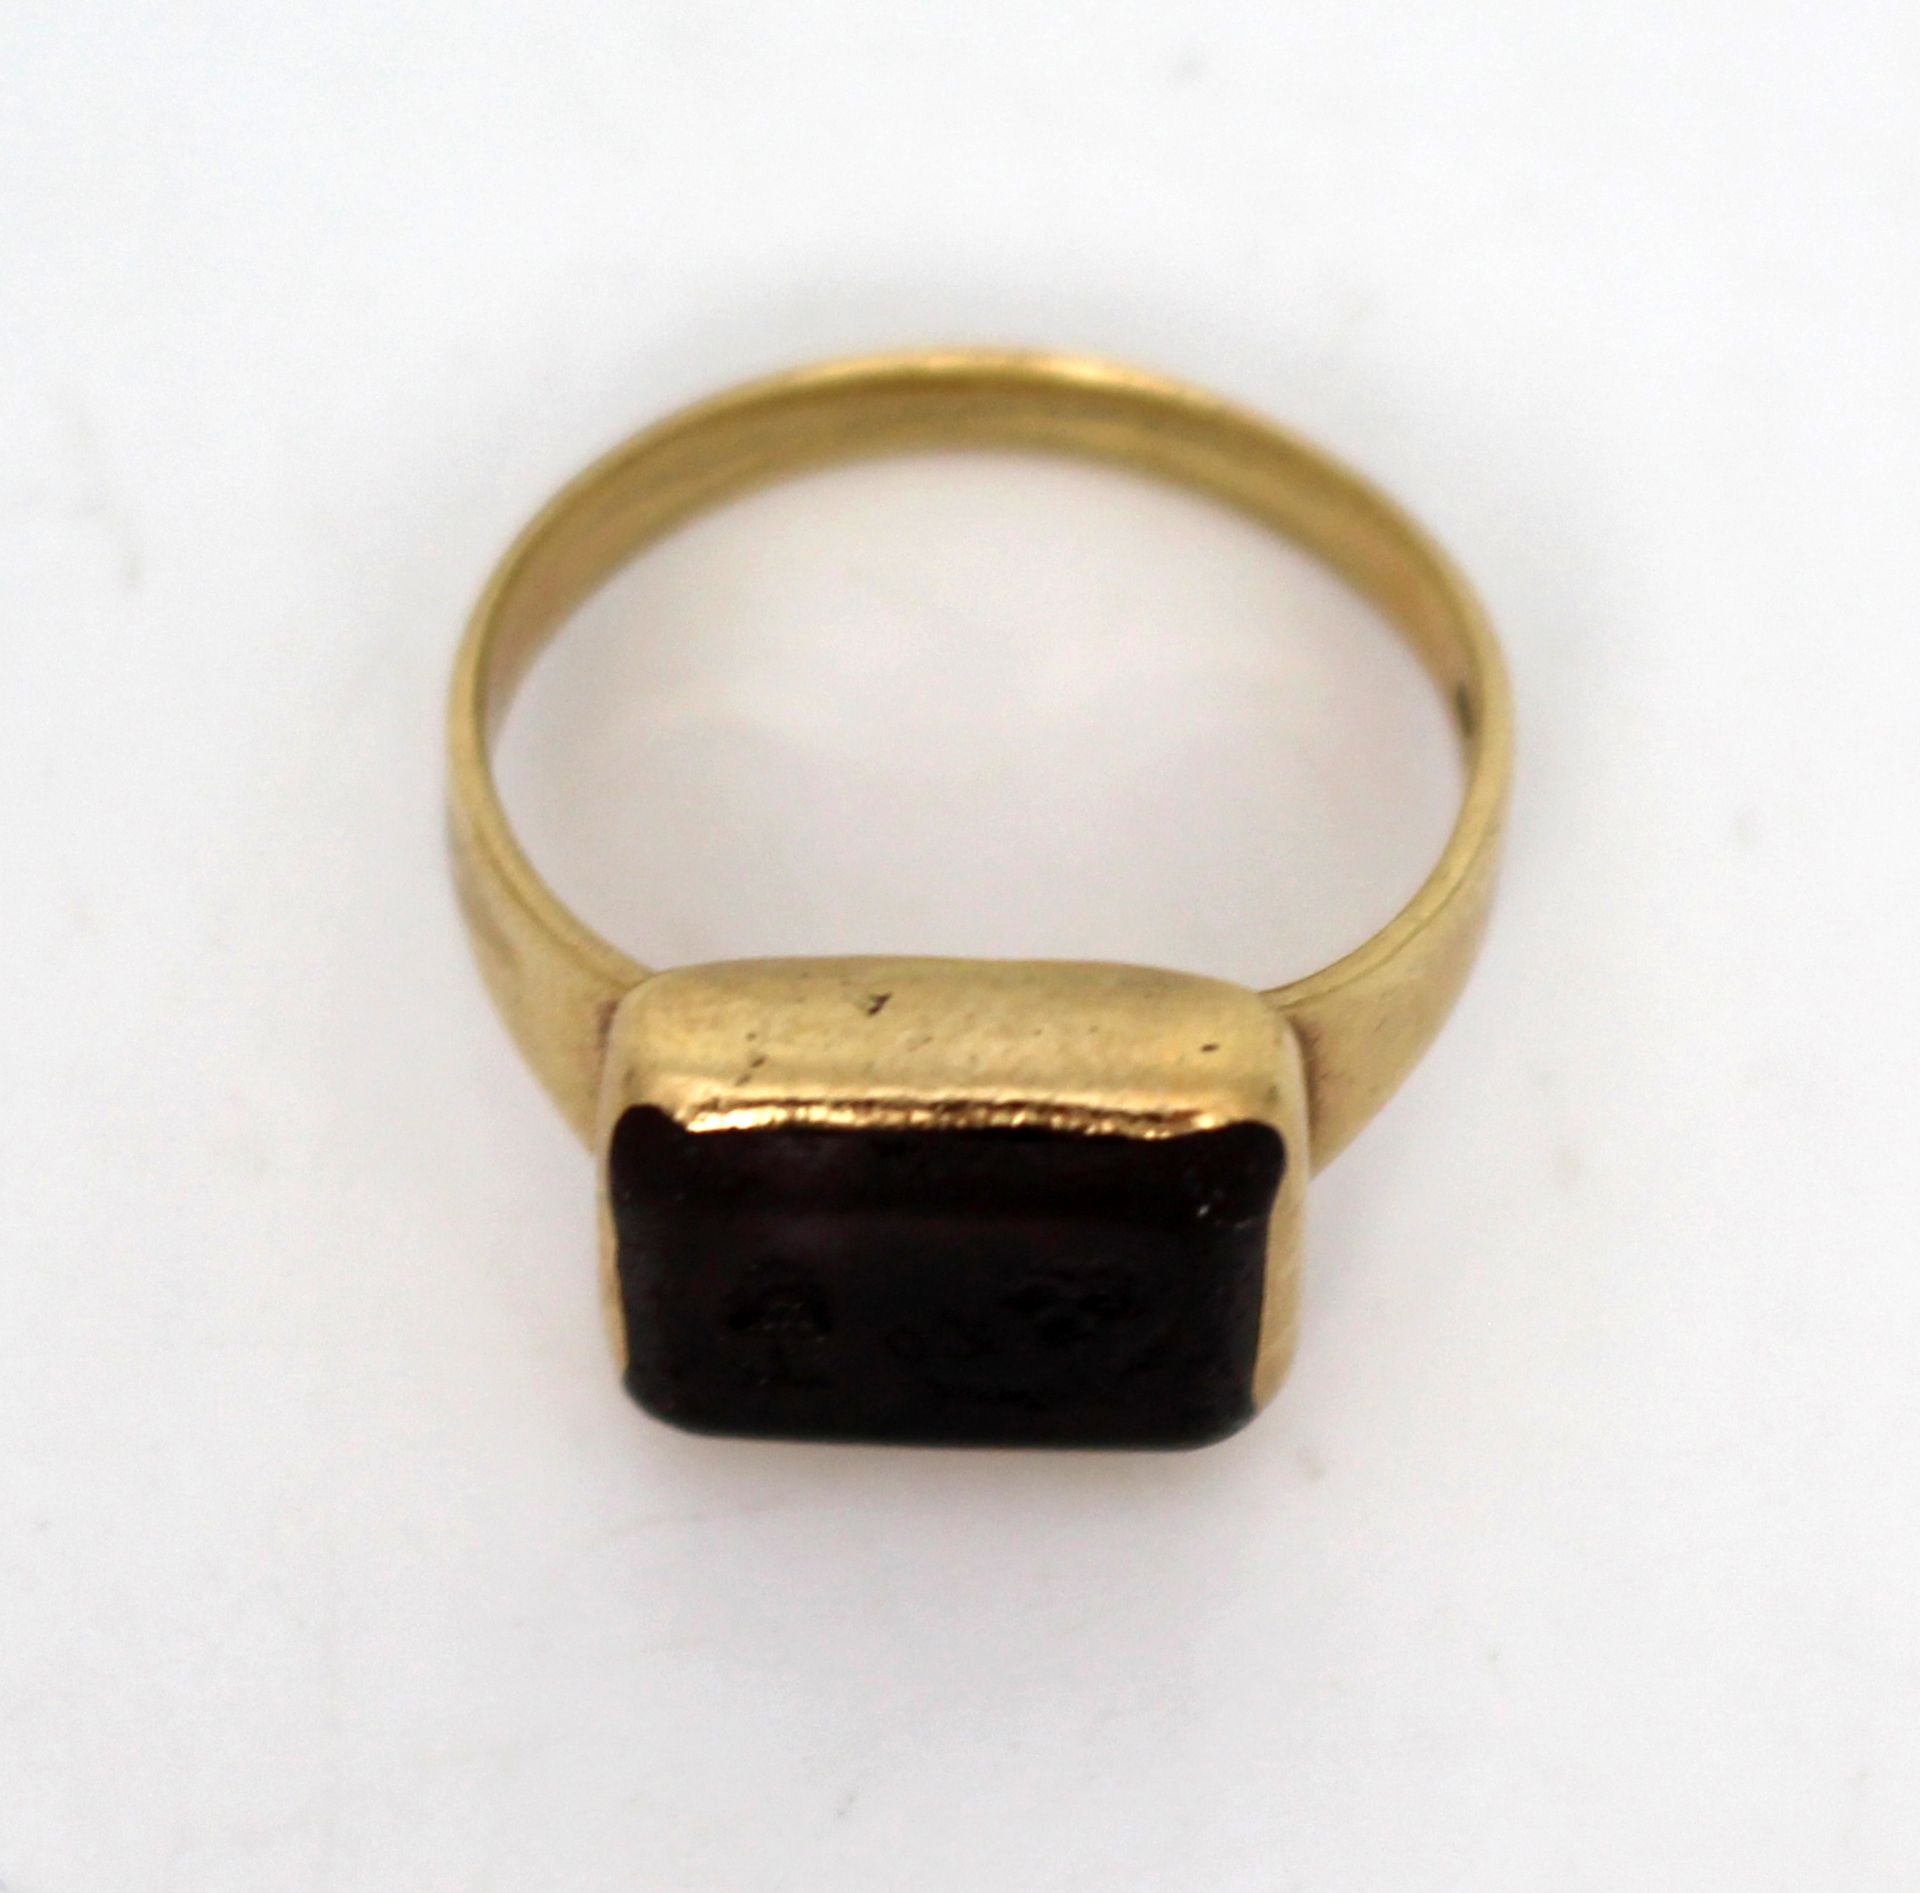 Vintage 9ct Gold Seal Ring - Image 4 of 4